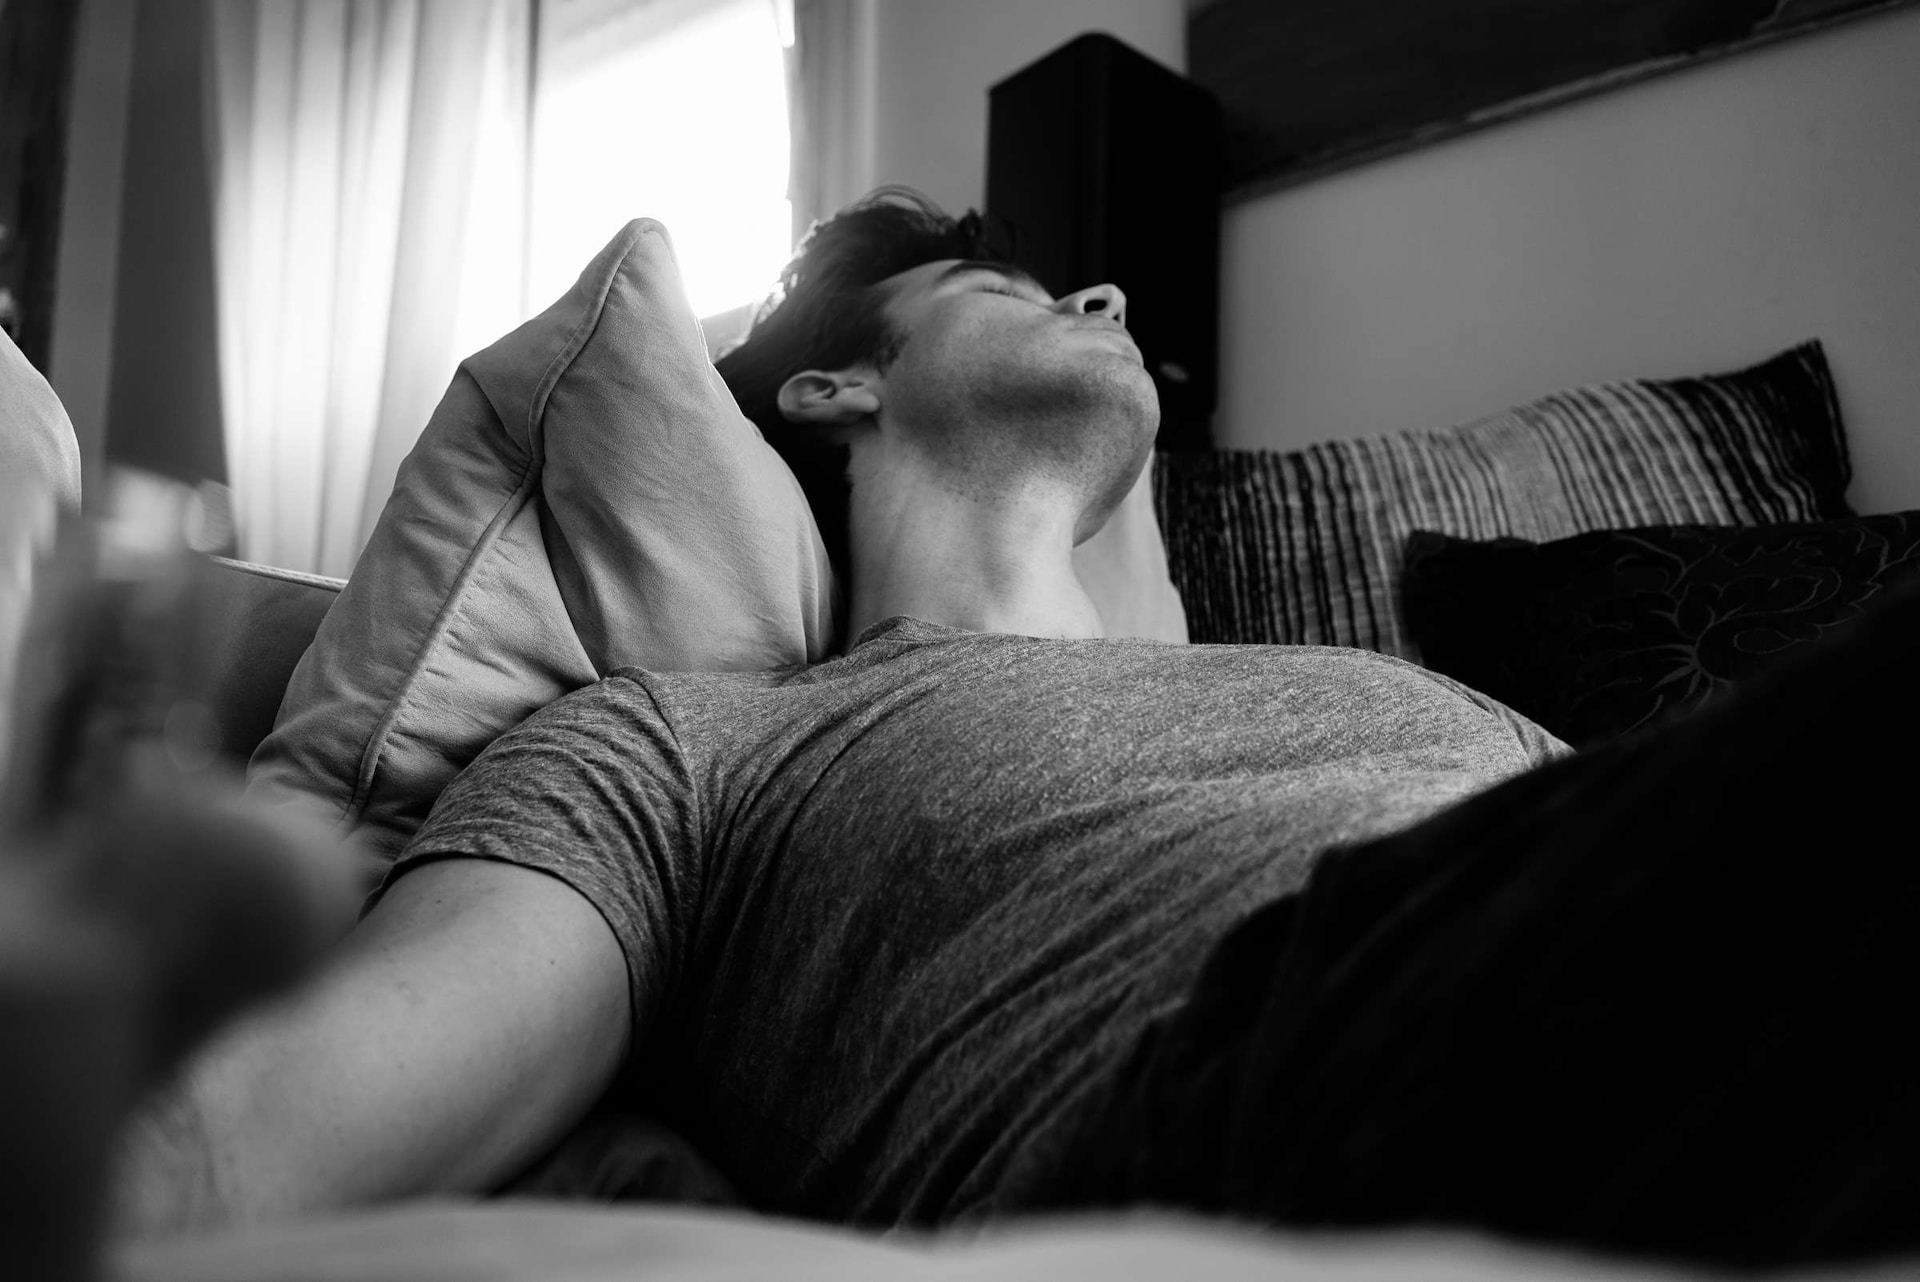 Man asleep in bed | Source: Unsplash